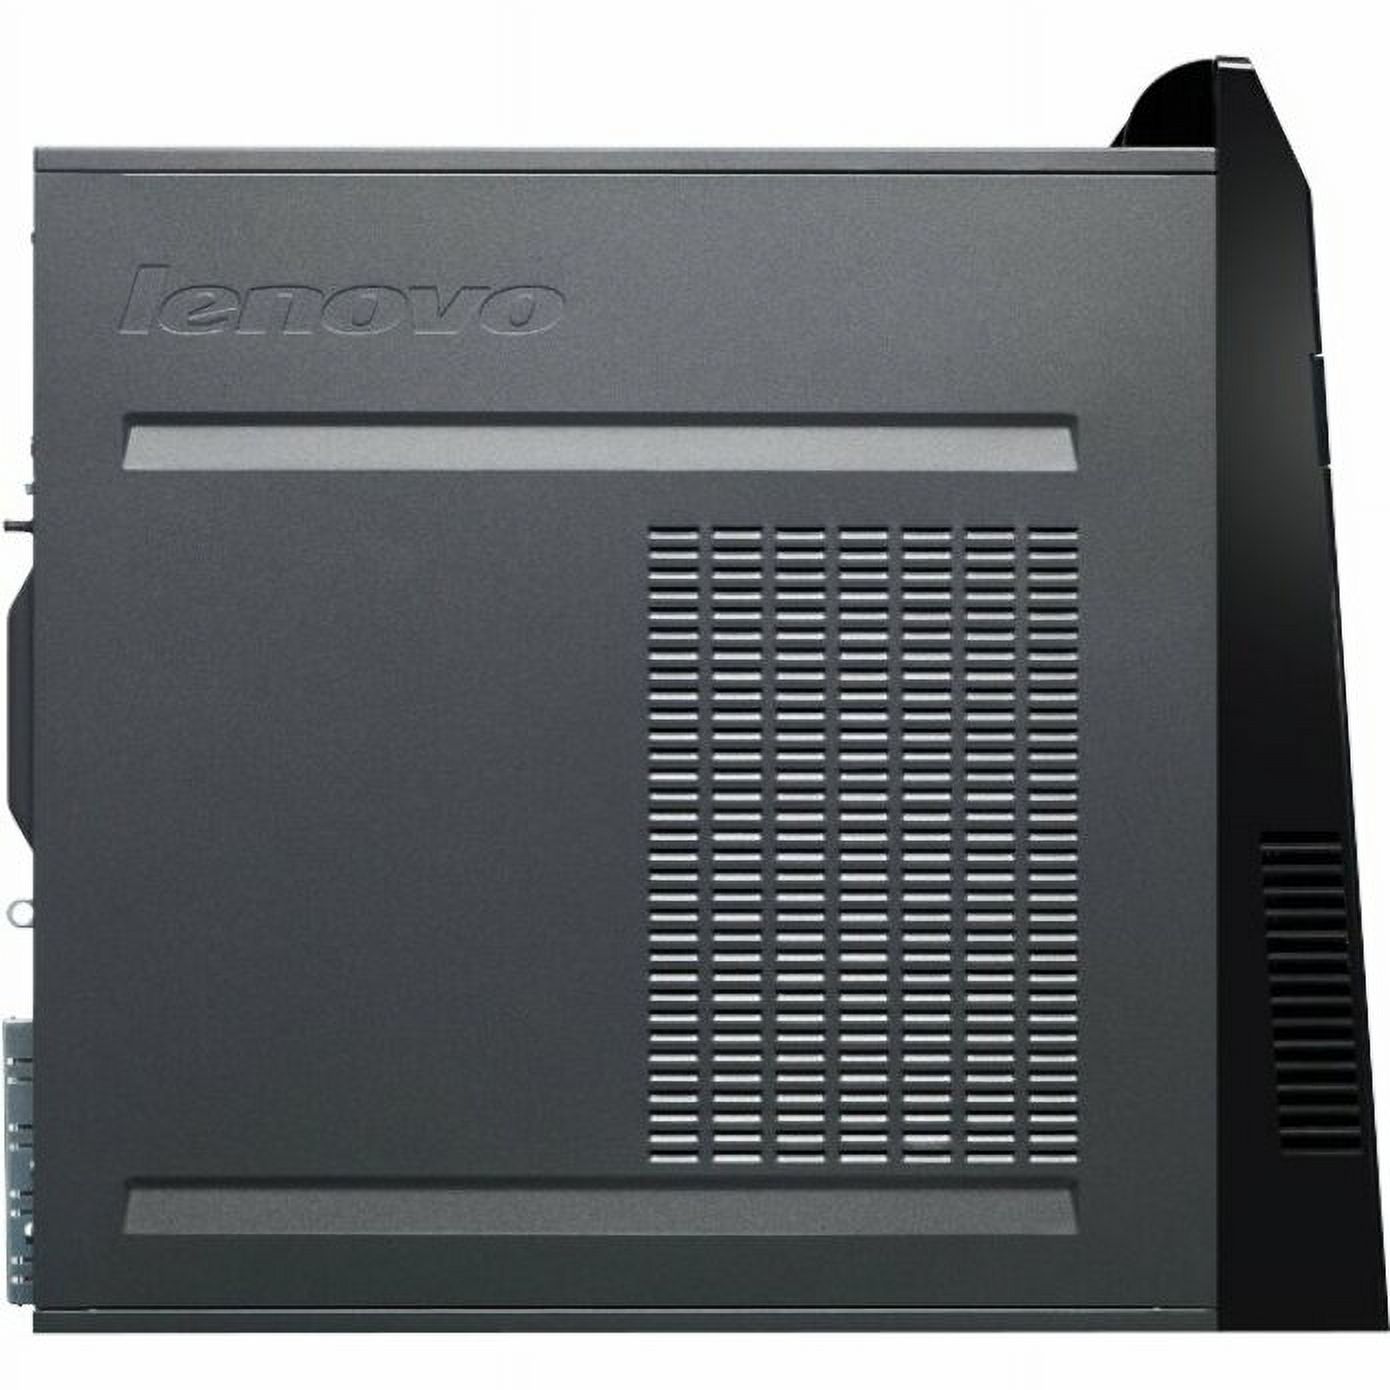 Lenovo ThinkCentre Desktop Tower Computer, Intel Core i3 i3-4130, 4GB RAM, 500GB HD, DVD Writer, Windows 7 Professional, 10B00006US - image 5 of 7